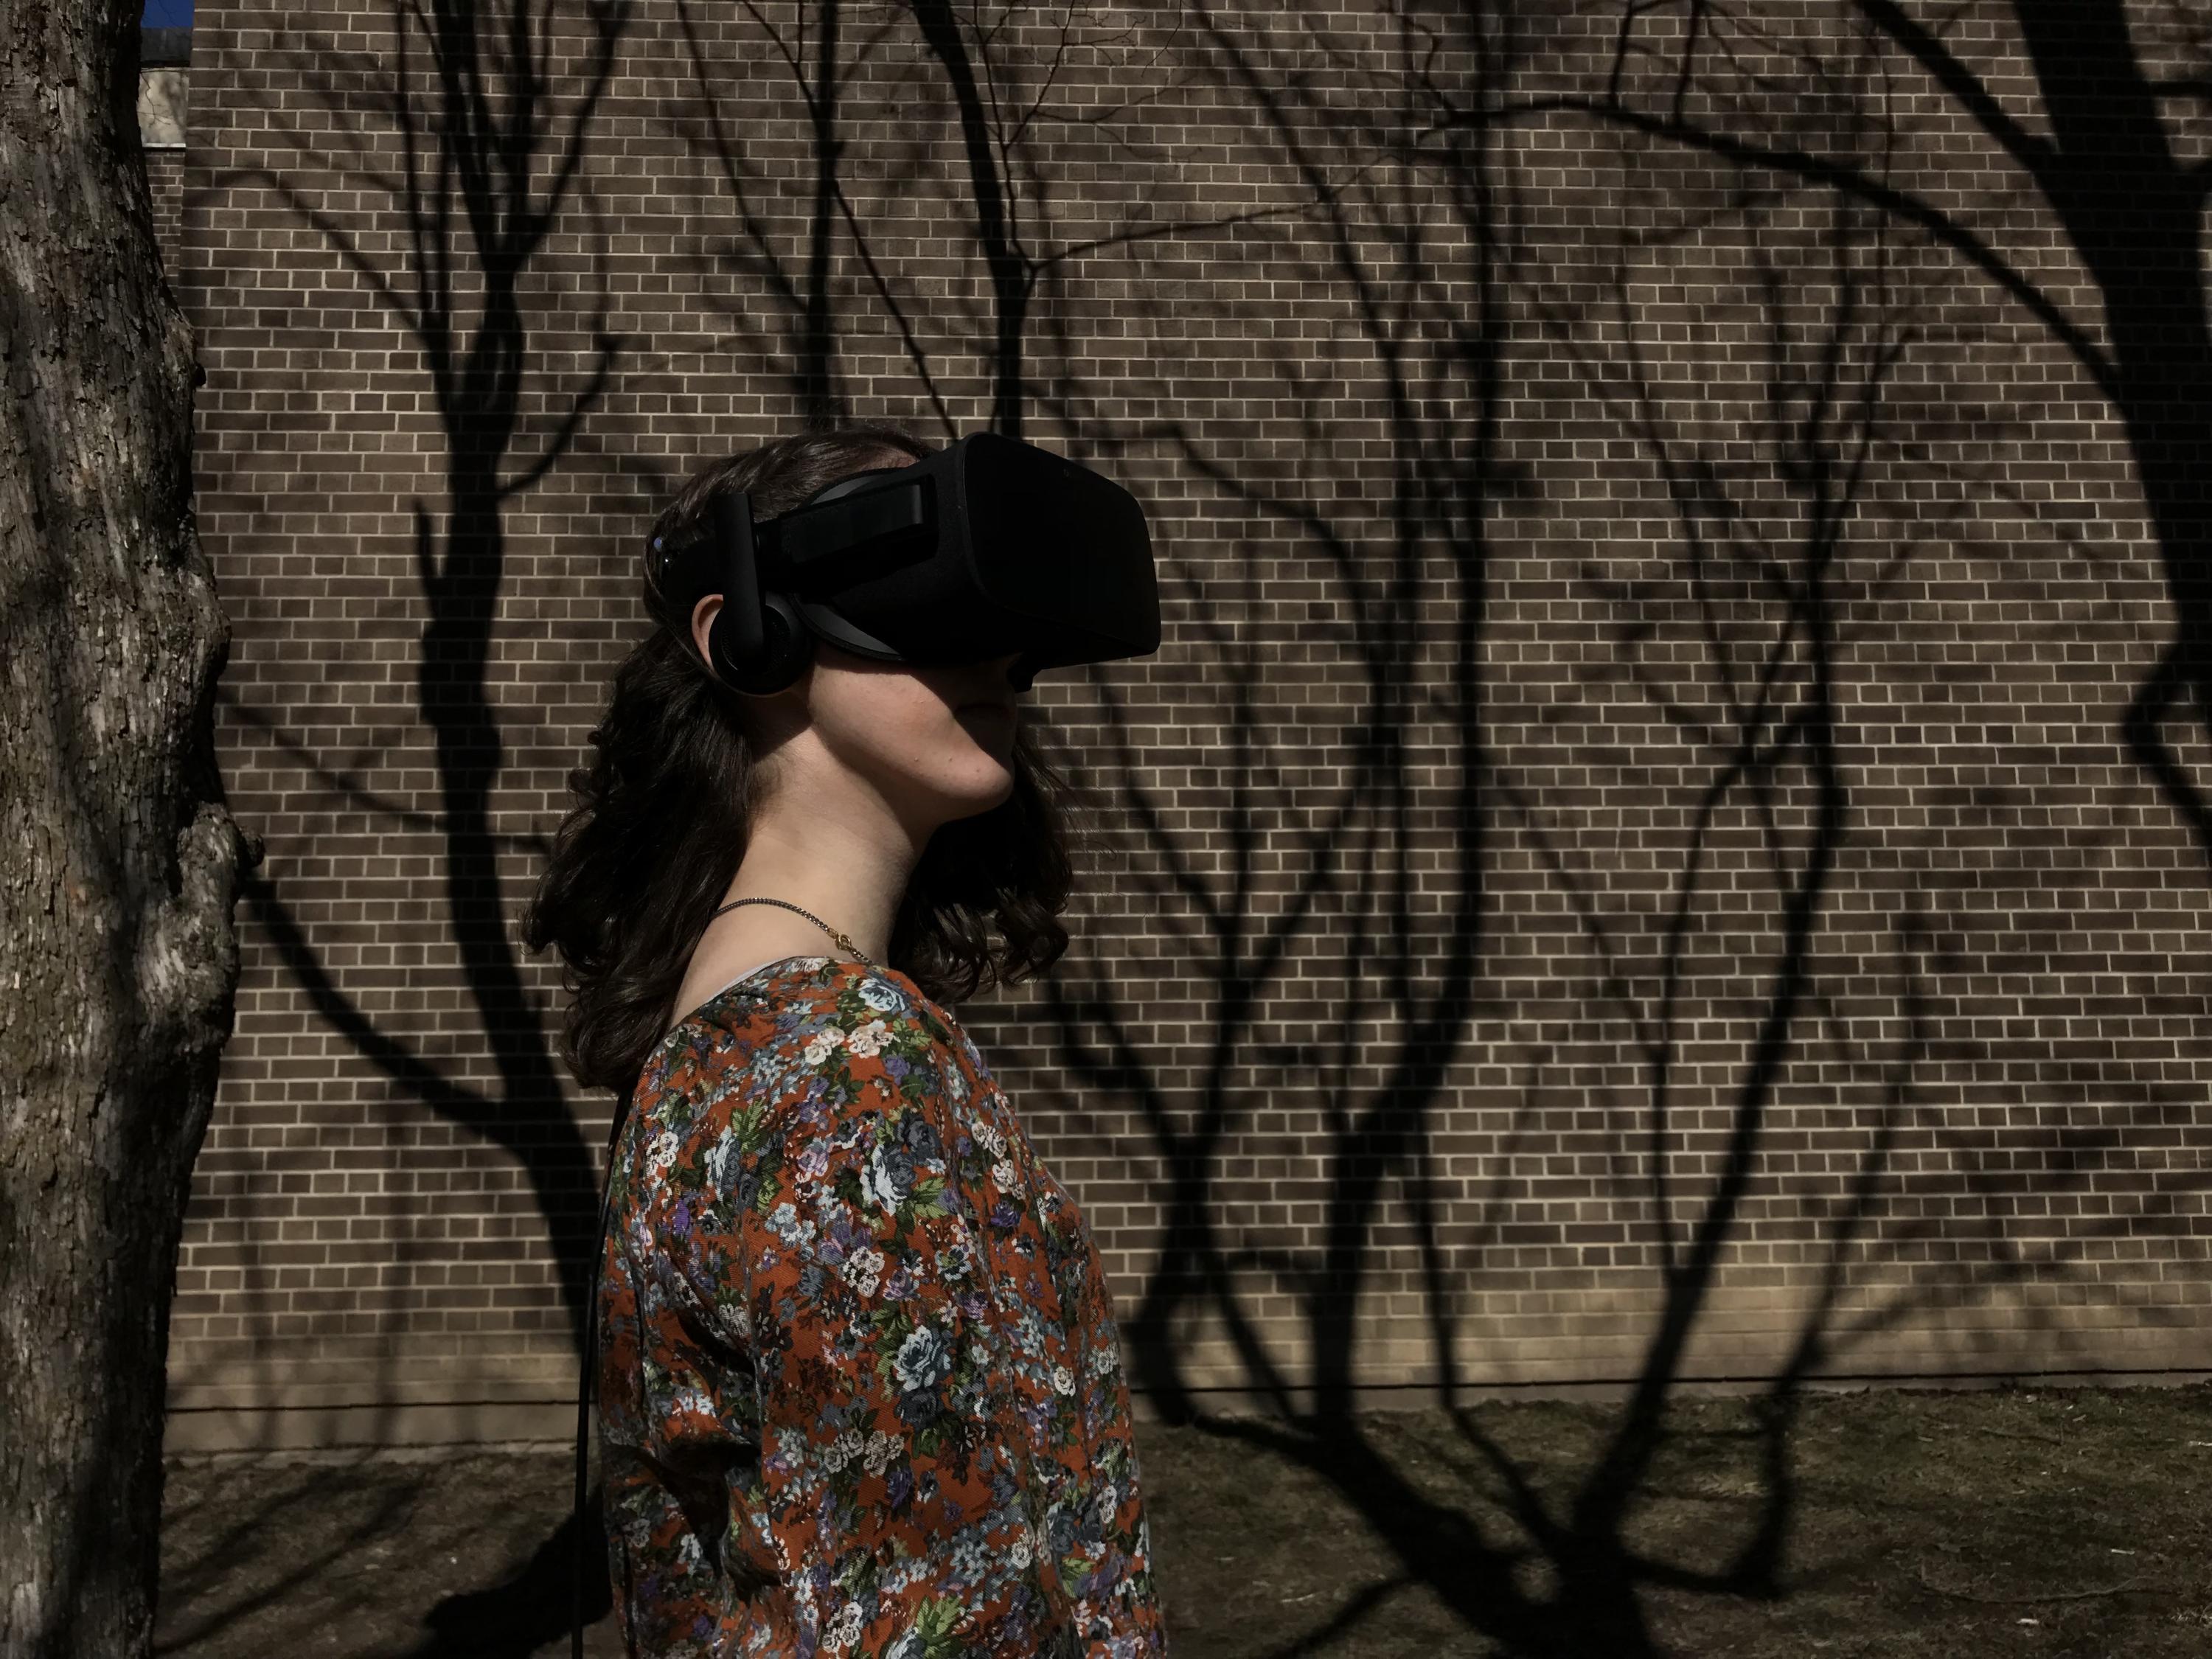 Jessica Bertrand wearing VR goggles